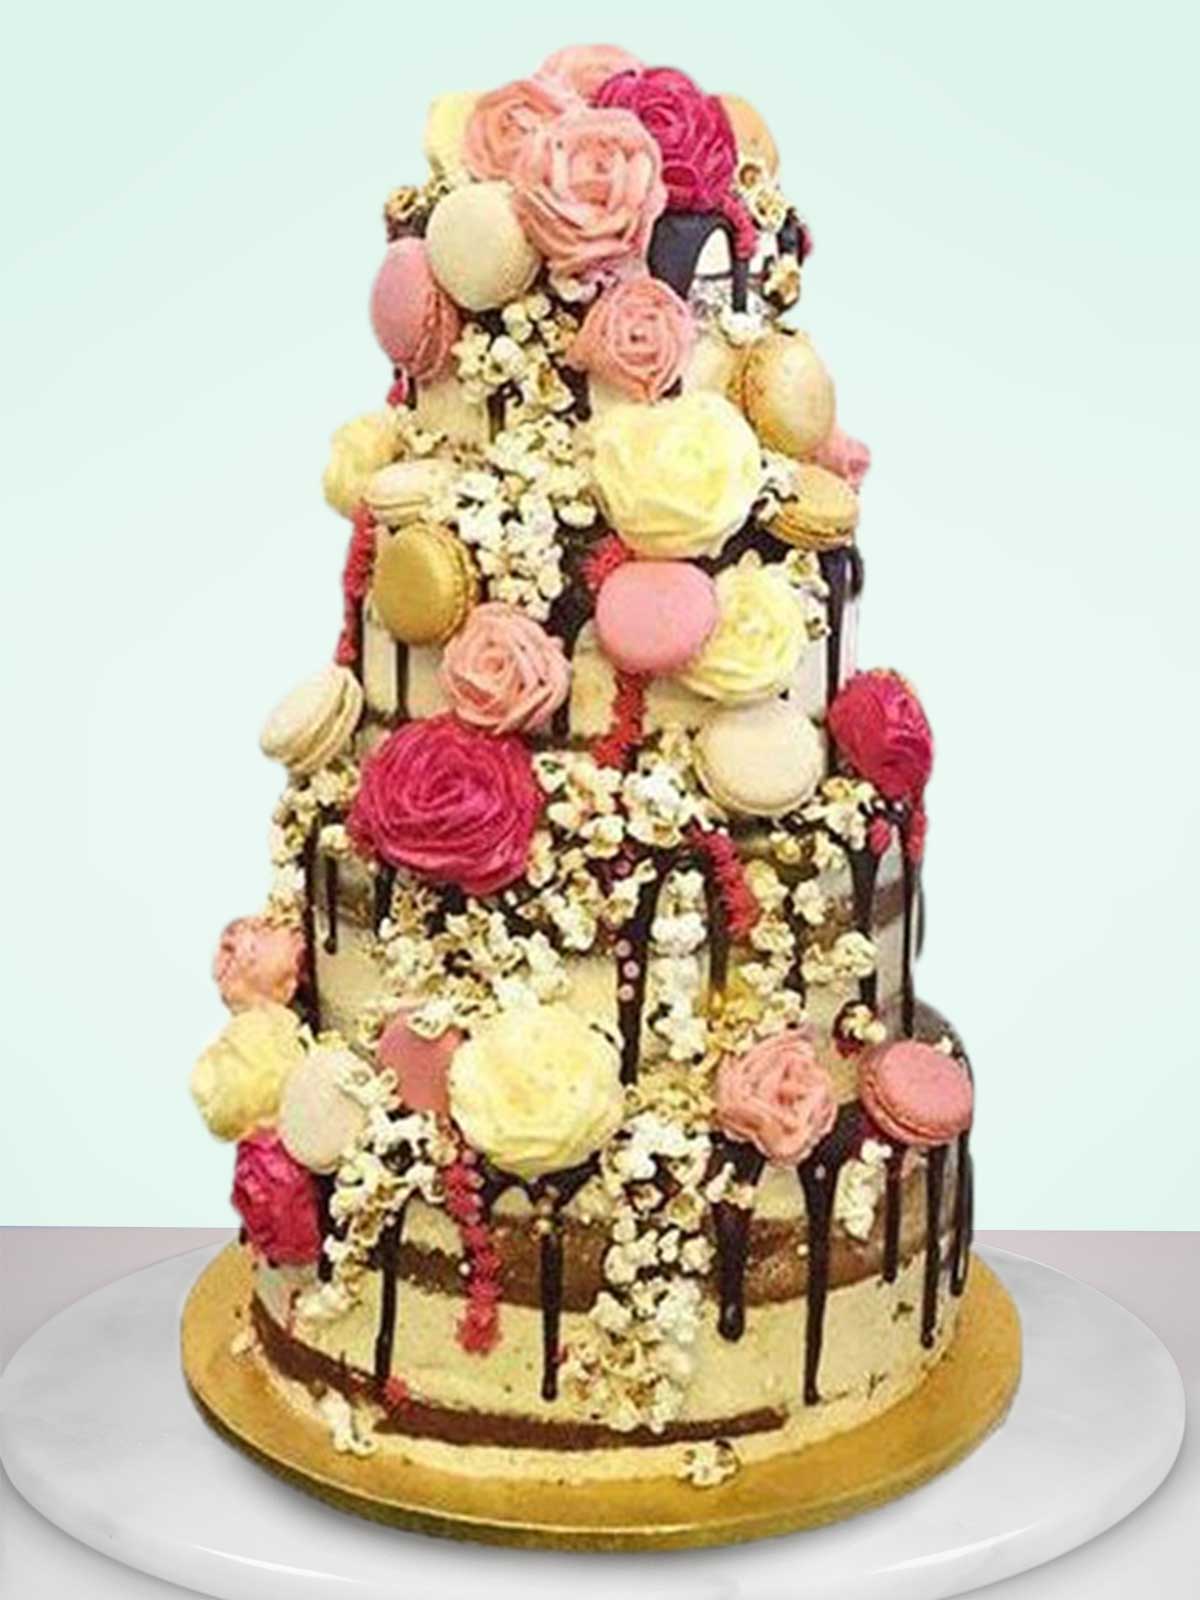 Meghan Markle's Wedding Cake Baker Reveals Her Surprising Instructions